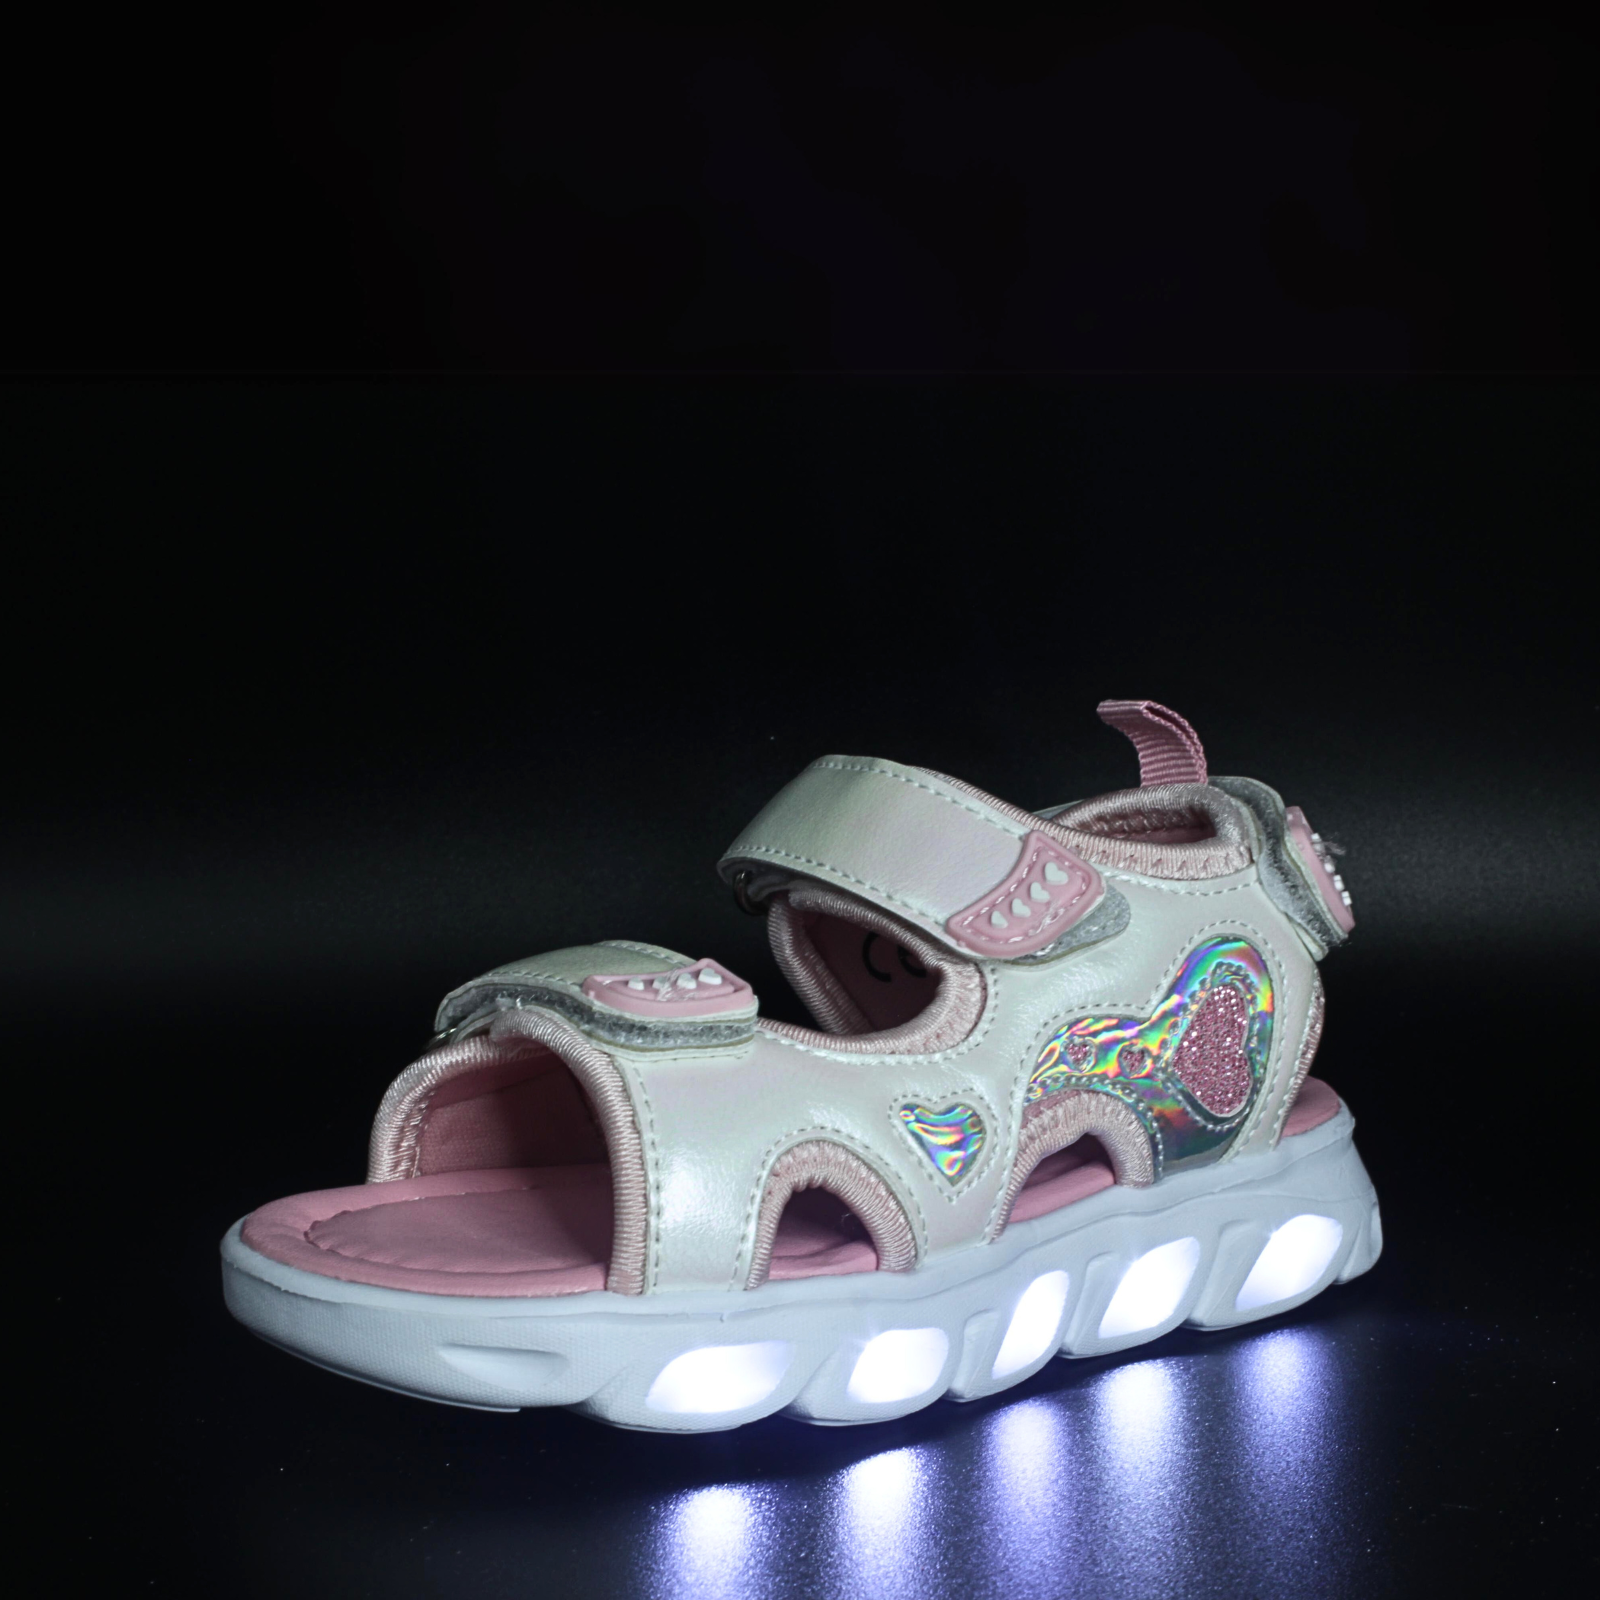 Sandale luminite LED 25-30